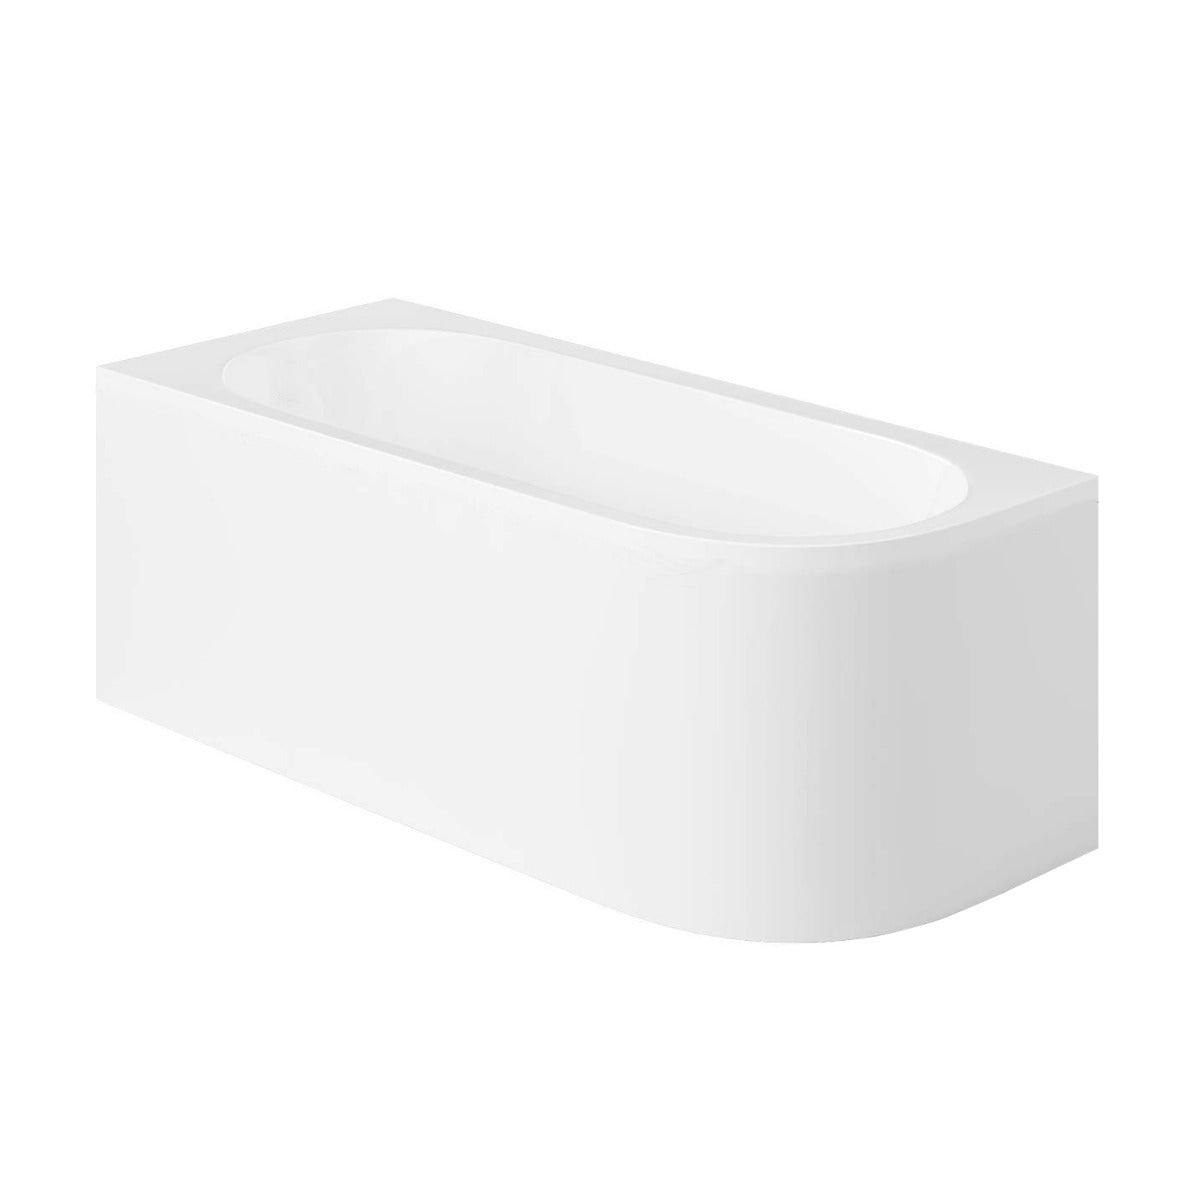 JassferryJASSFERRY 1800x820 mm Freestanding  Acrylic Corner Bathtub Soaking SPA (Left Hand Bath)Bathtubs